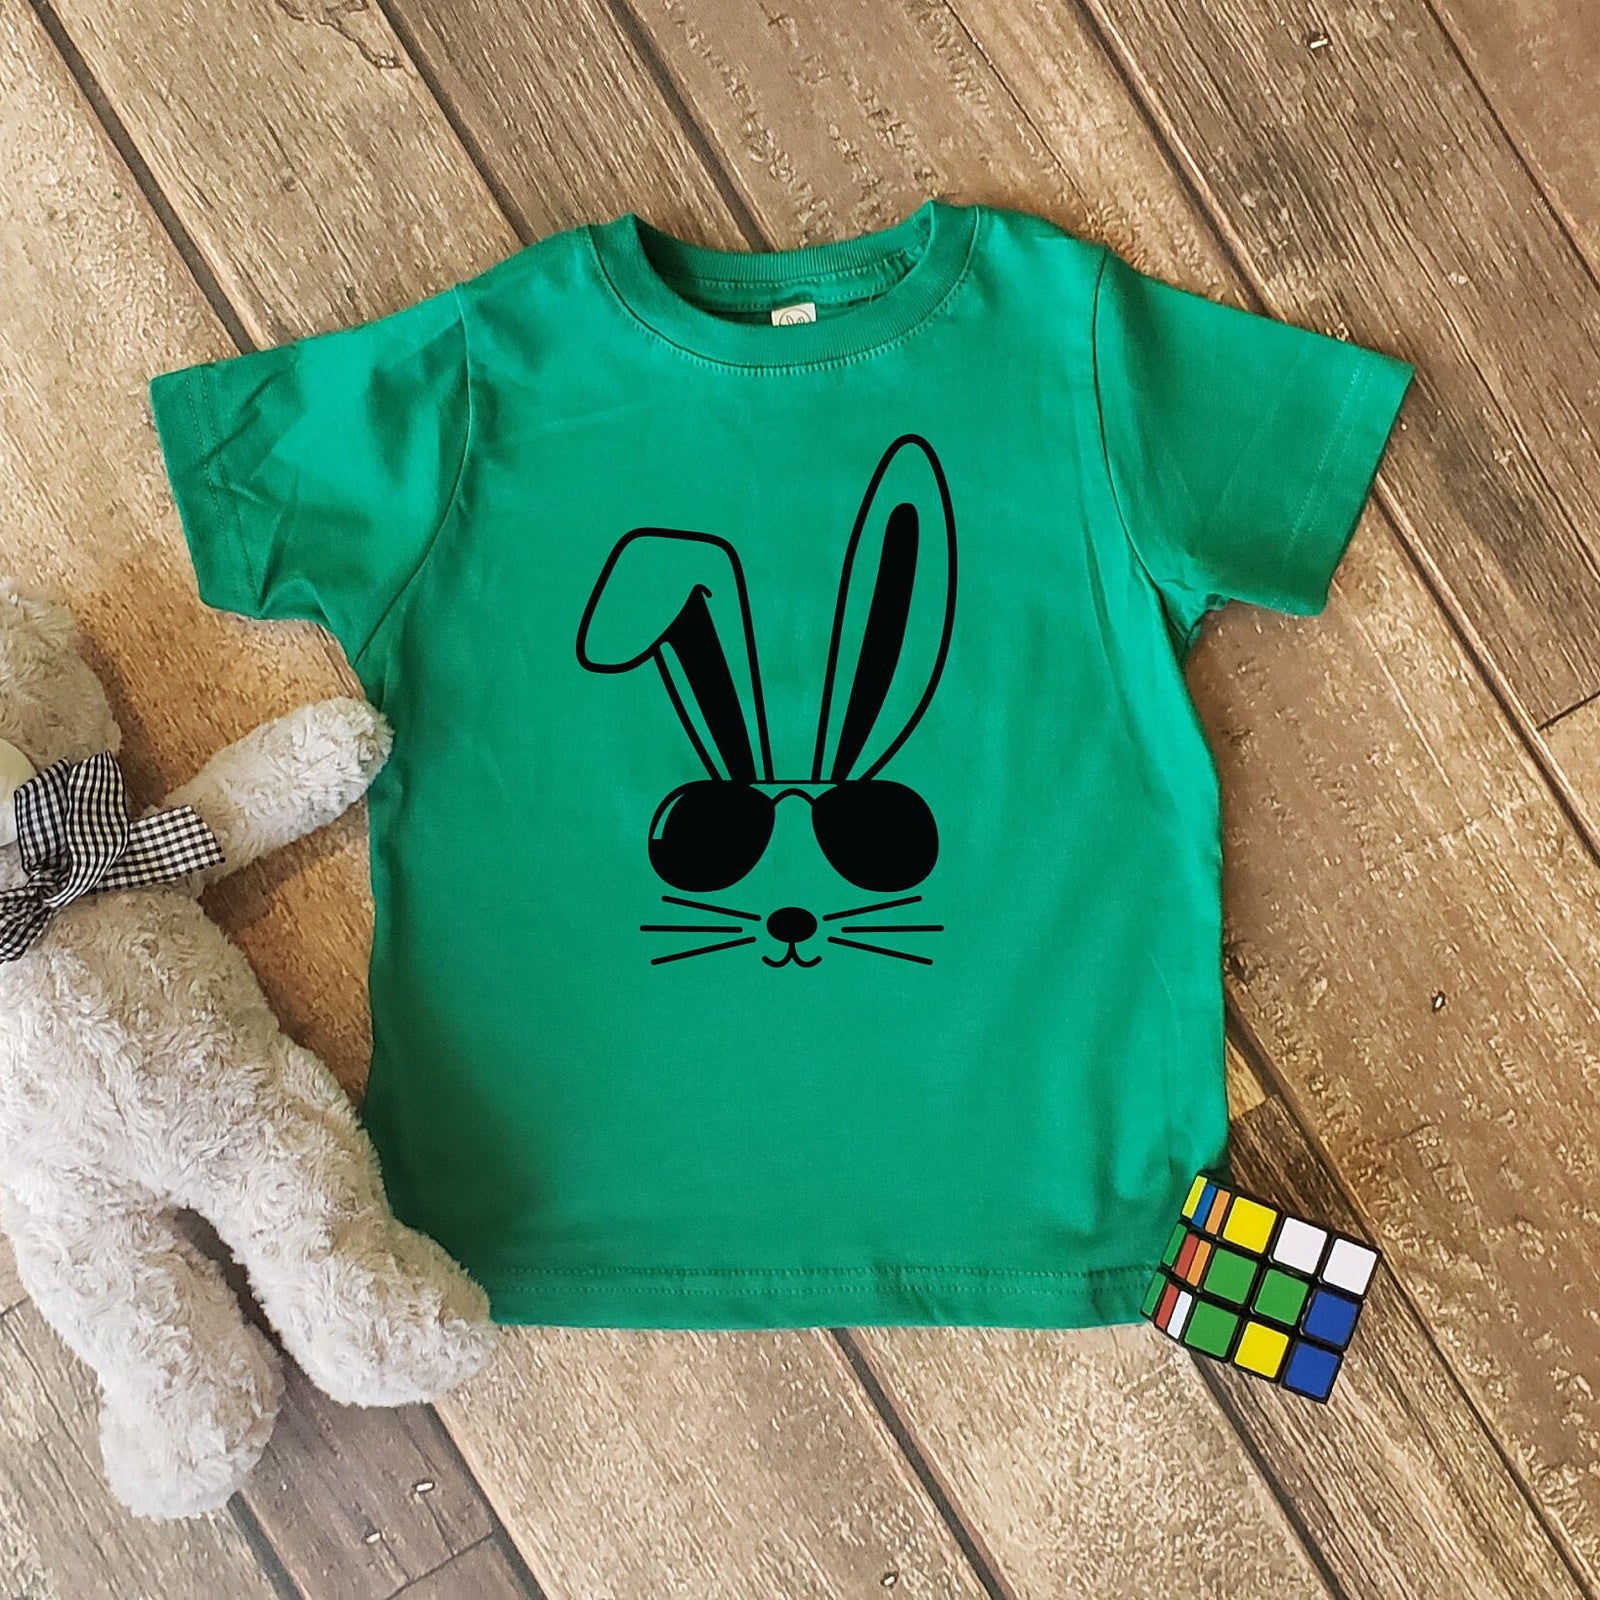 Cute Bunny Shirt - Kids Easter Shirt - Cute Rabbit Shirt